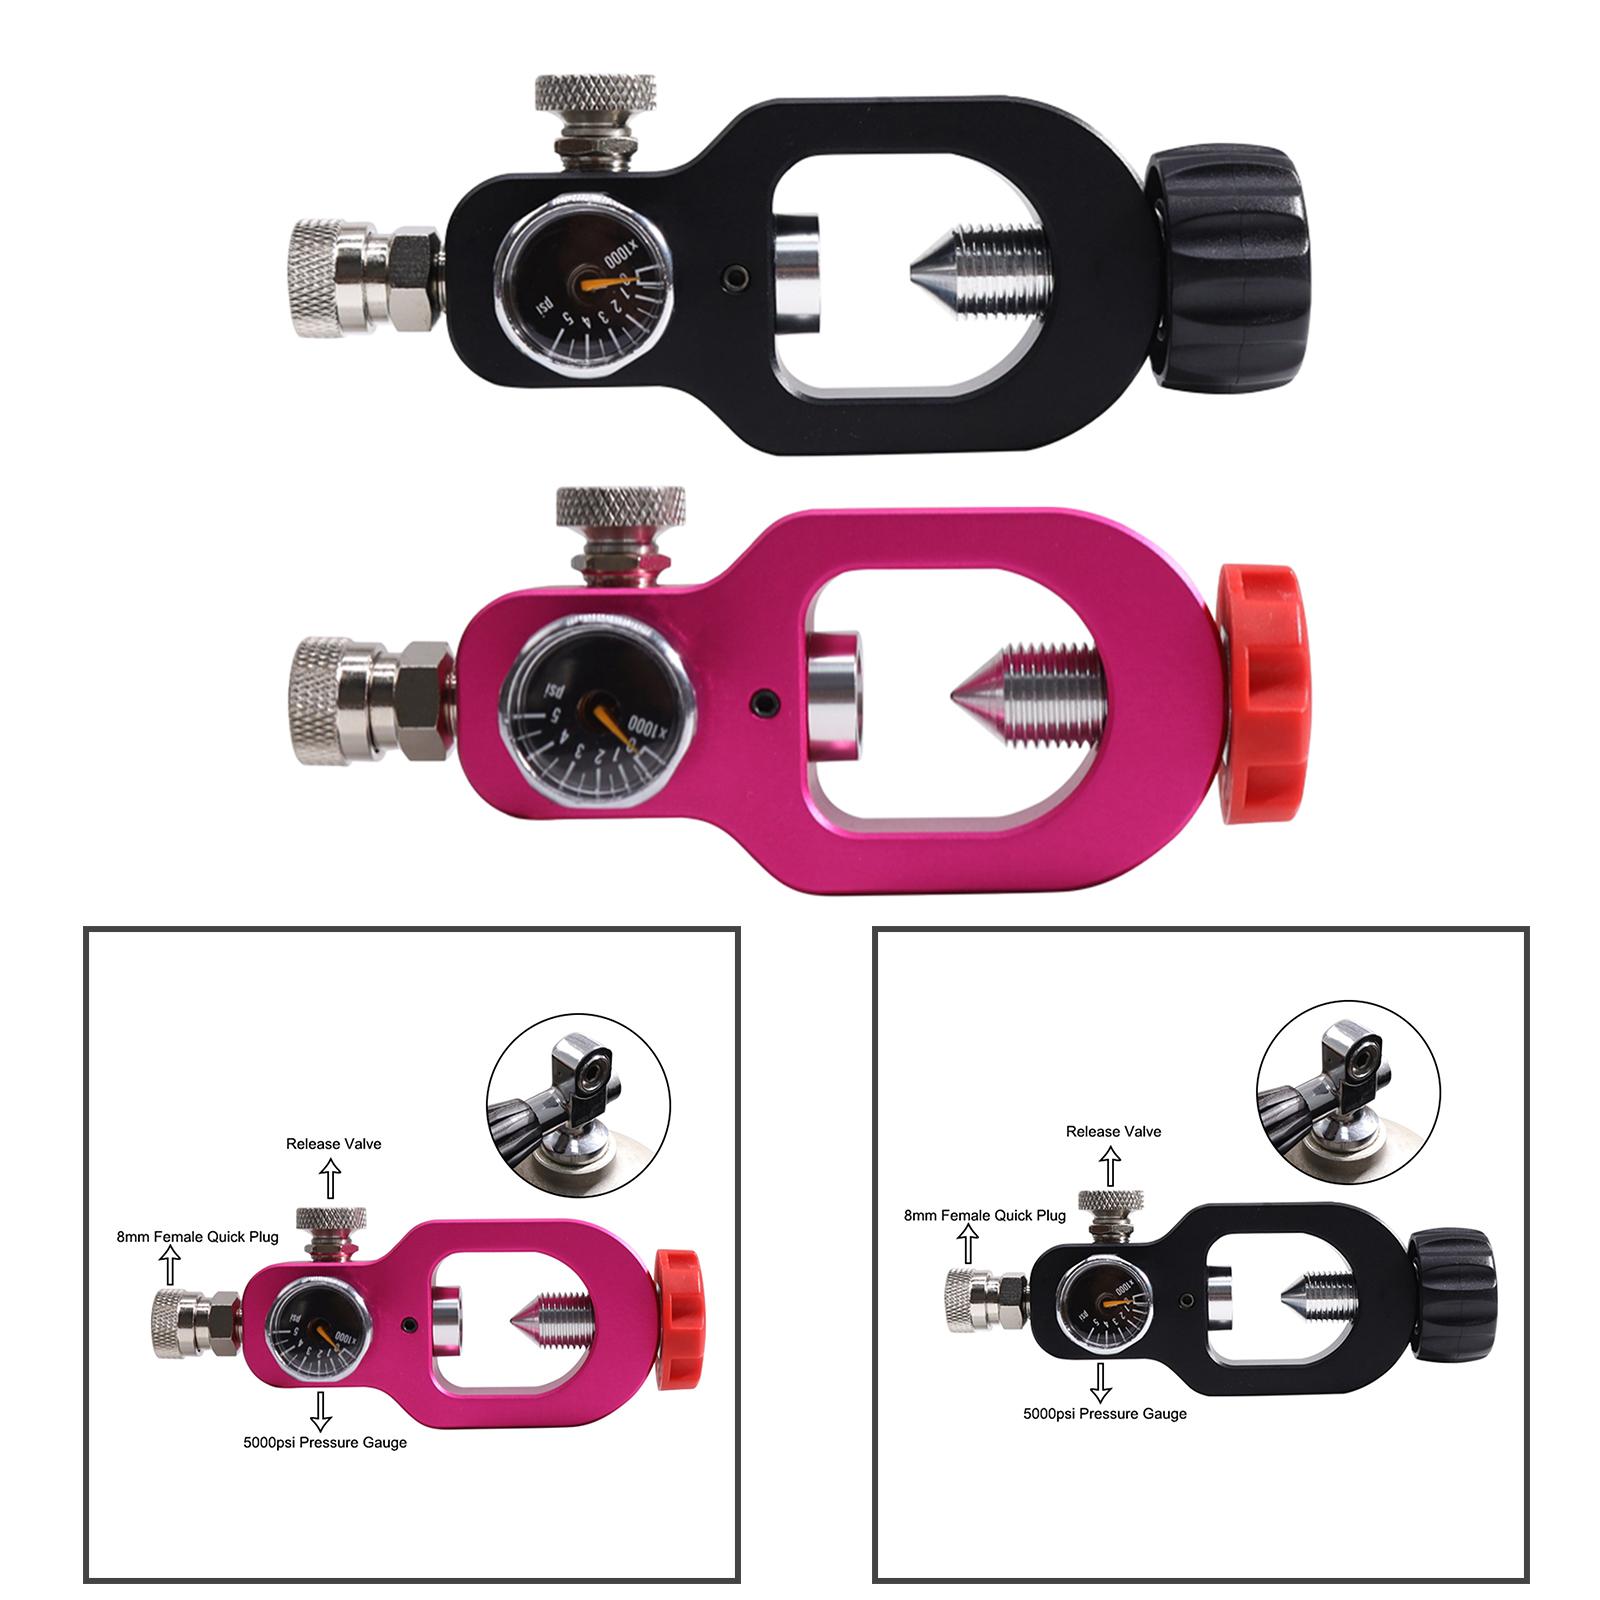 Scuba Din Refill Adapter, Cylinder Refill Adapter Accessory, Scuba Fill Station Scuba Adapter for Diving Equipment